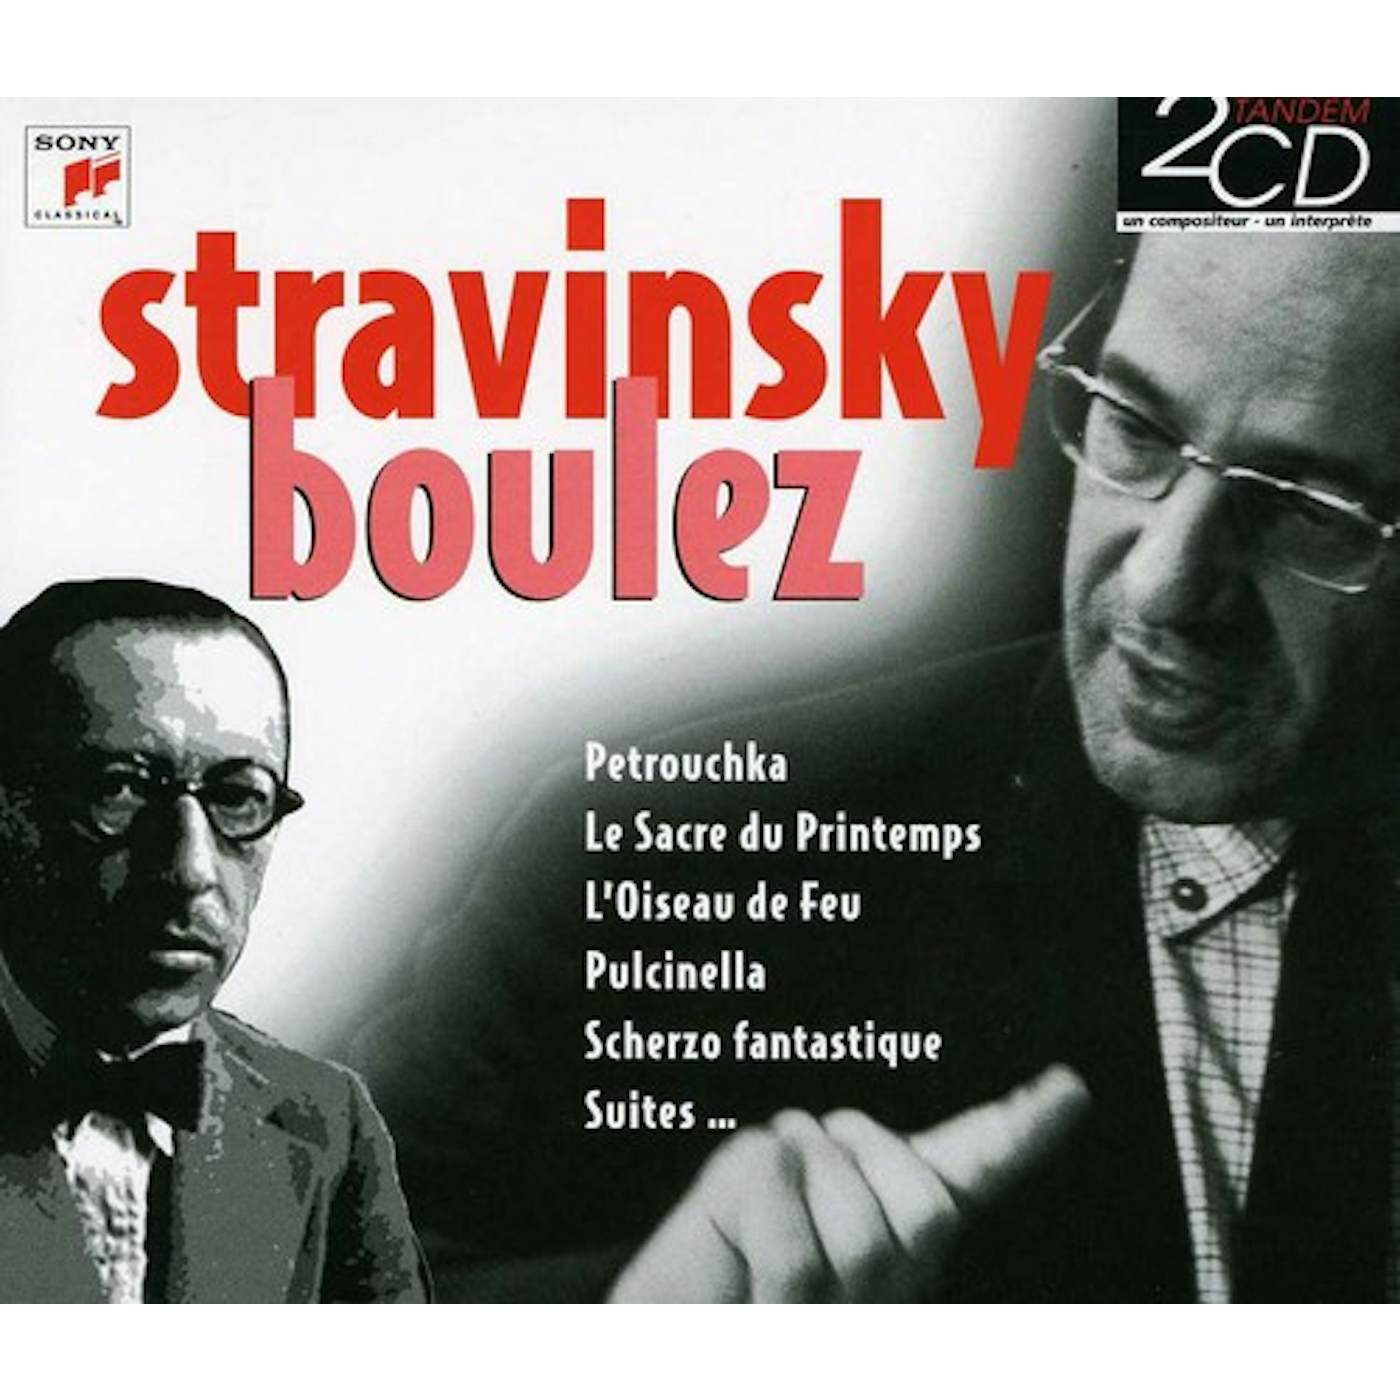 Pierre Boulez TANDEM STRAVINSKY/BOULEZ CD